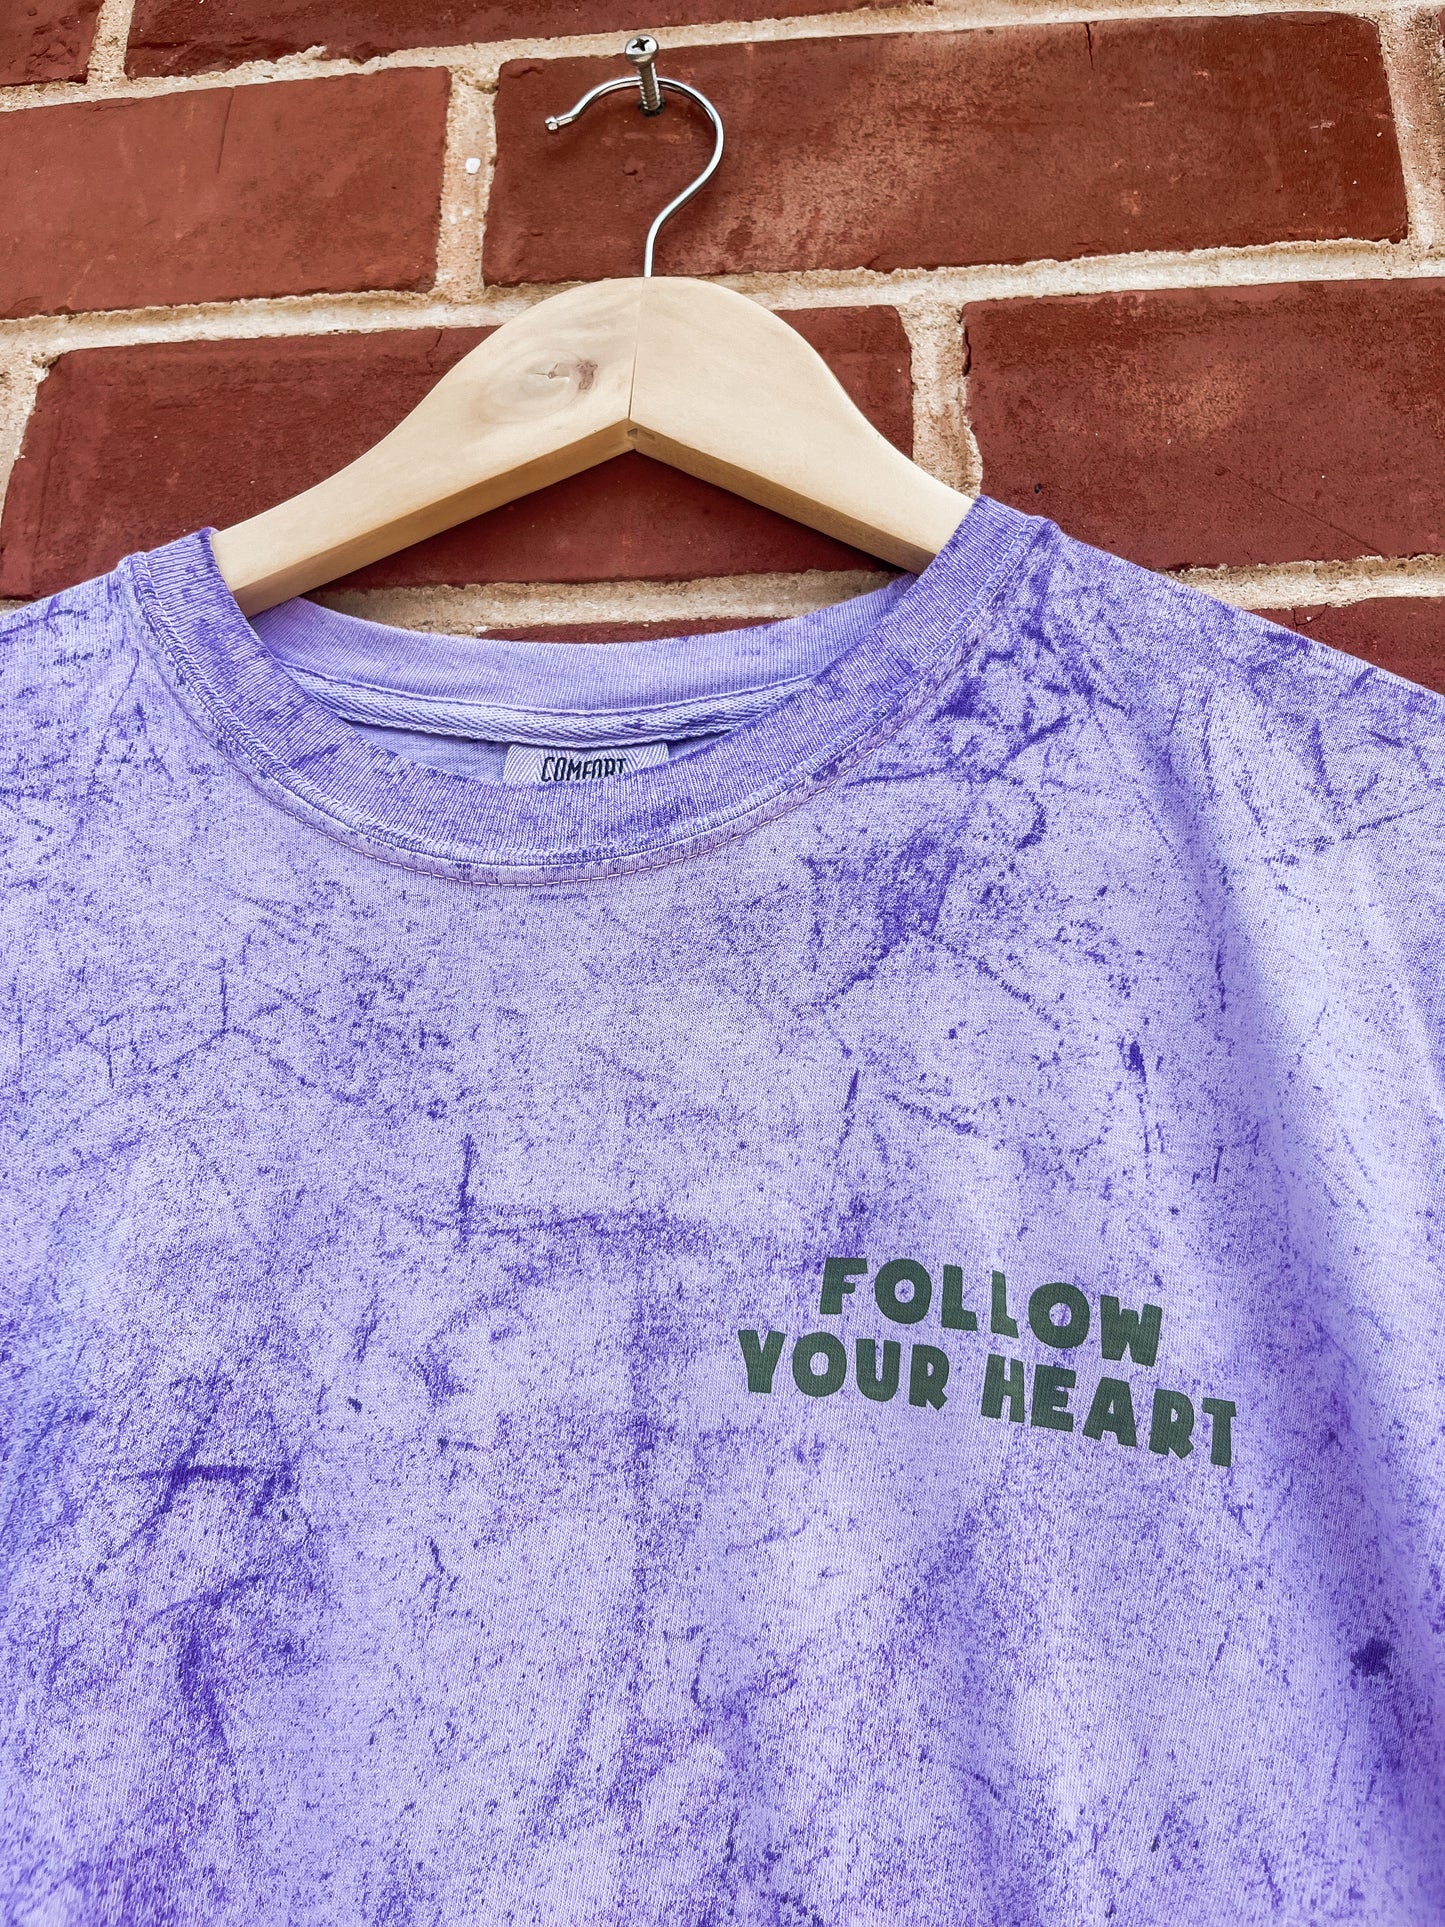 Follow Your Heart Good Things Will Follow T-shirt